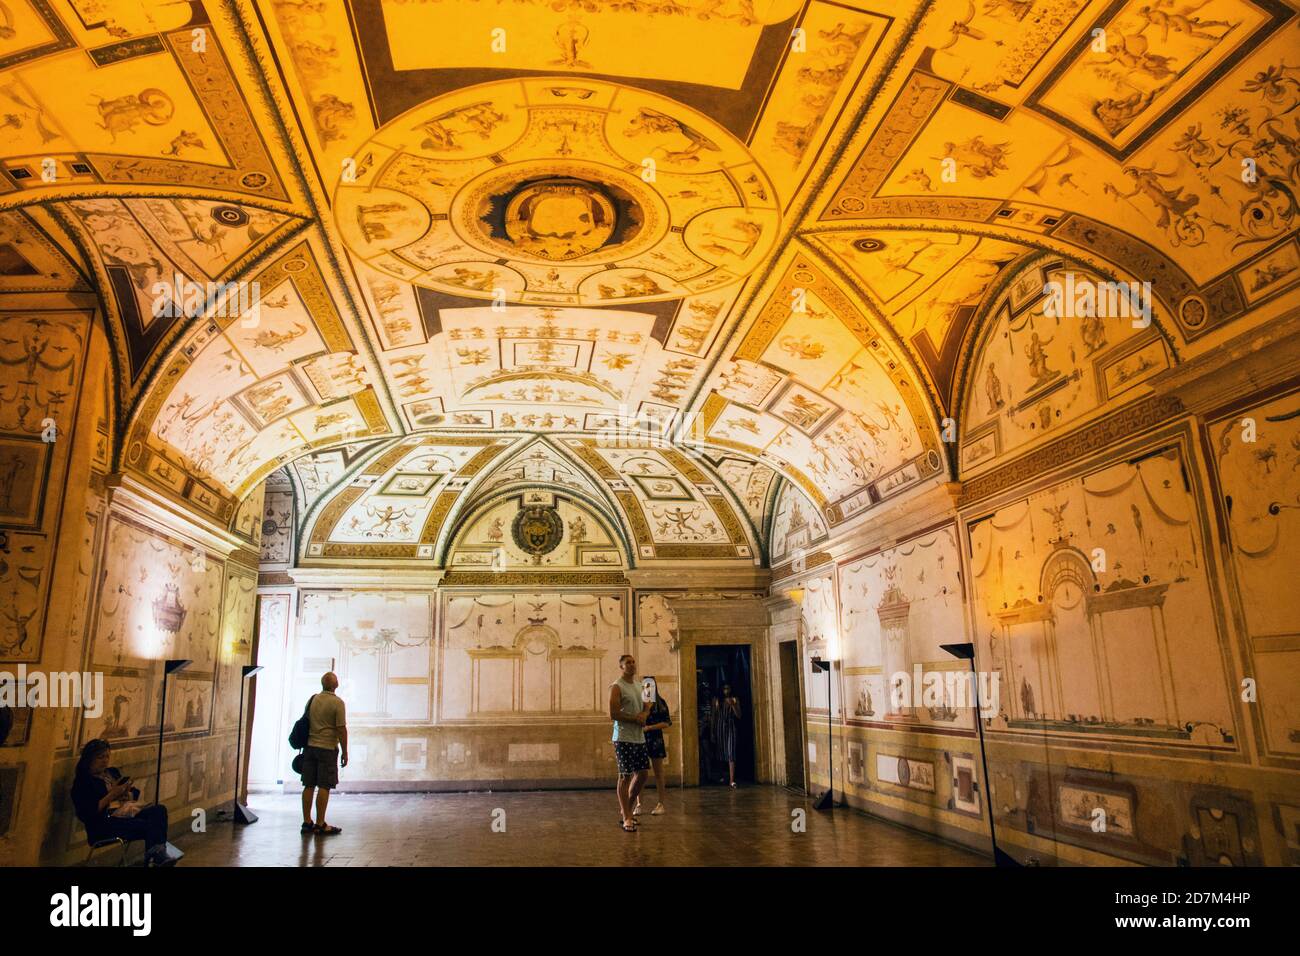 Die Bibliothek - Sala della Biblioteca in CastelSant'Angelo Rom Vatikan Italien Stockfoto